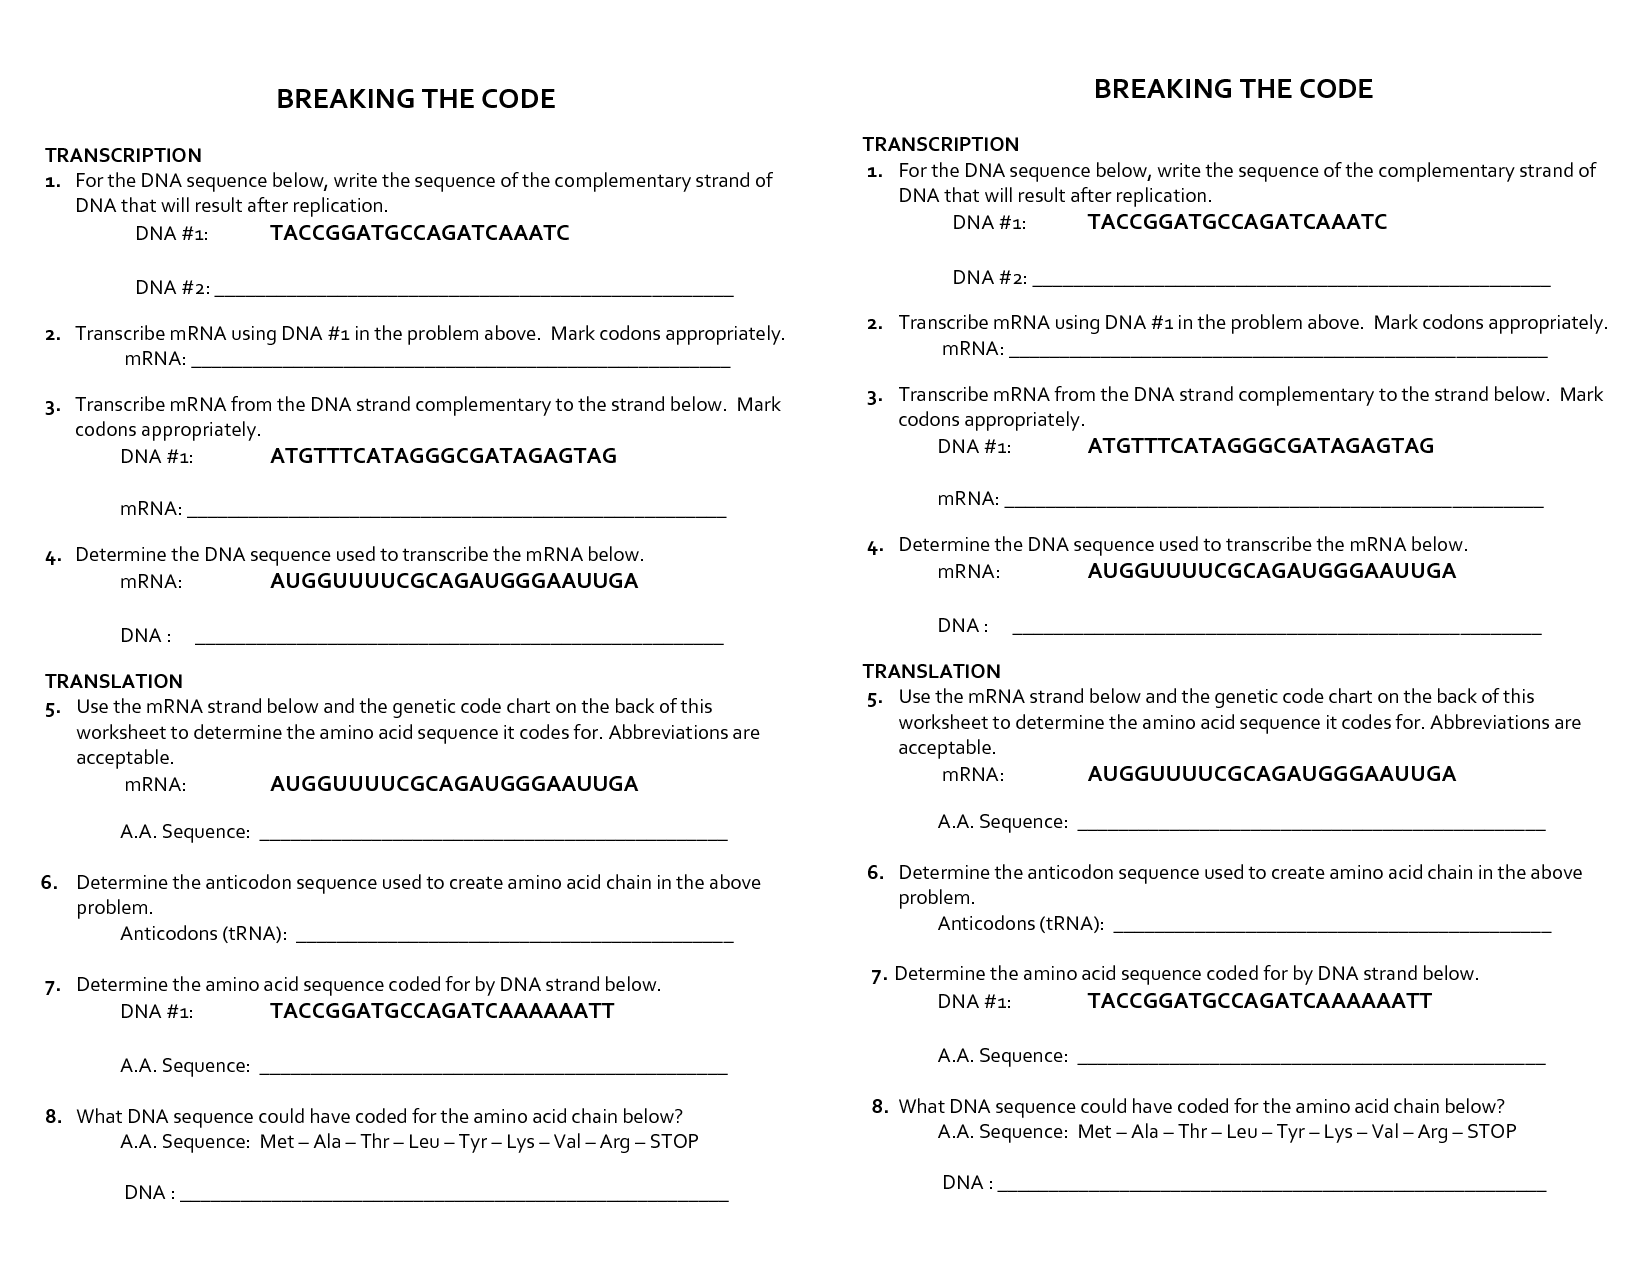 17-best-images-of-break-the-code-worksheets-christmas-code-worksheets-printables-code-breaker